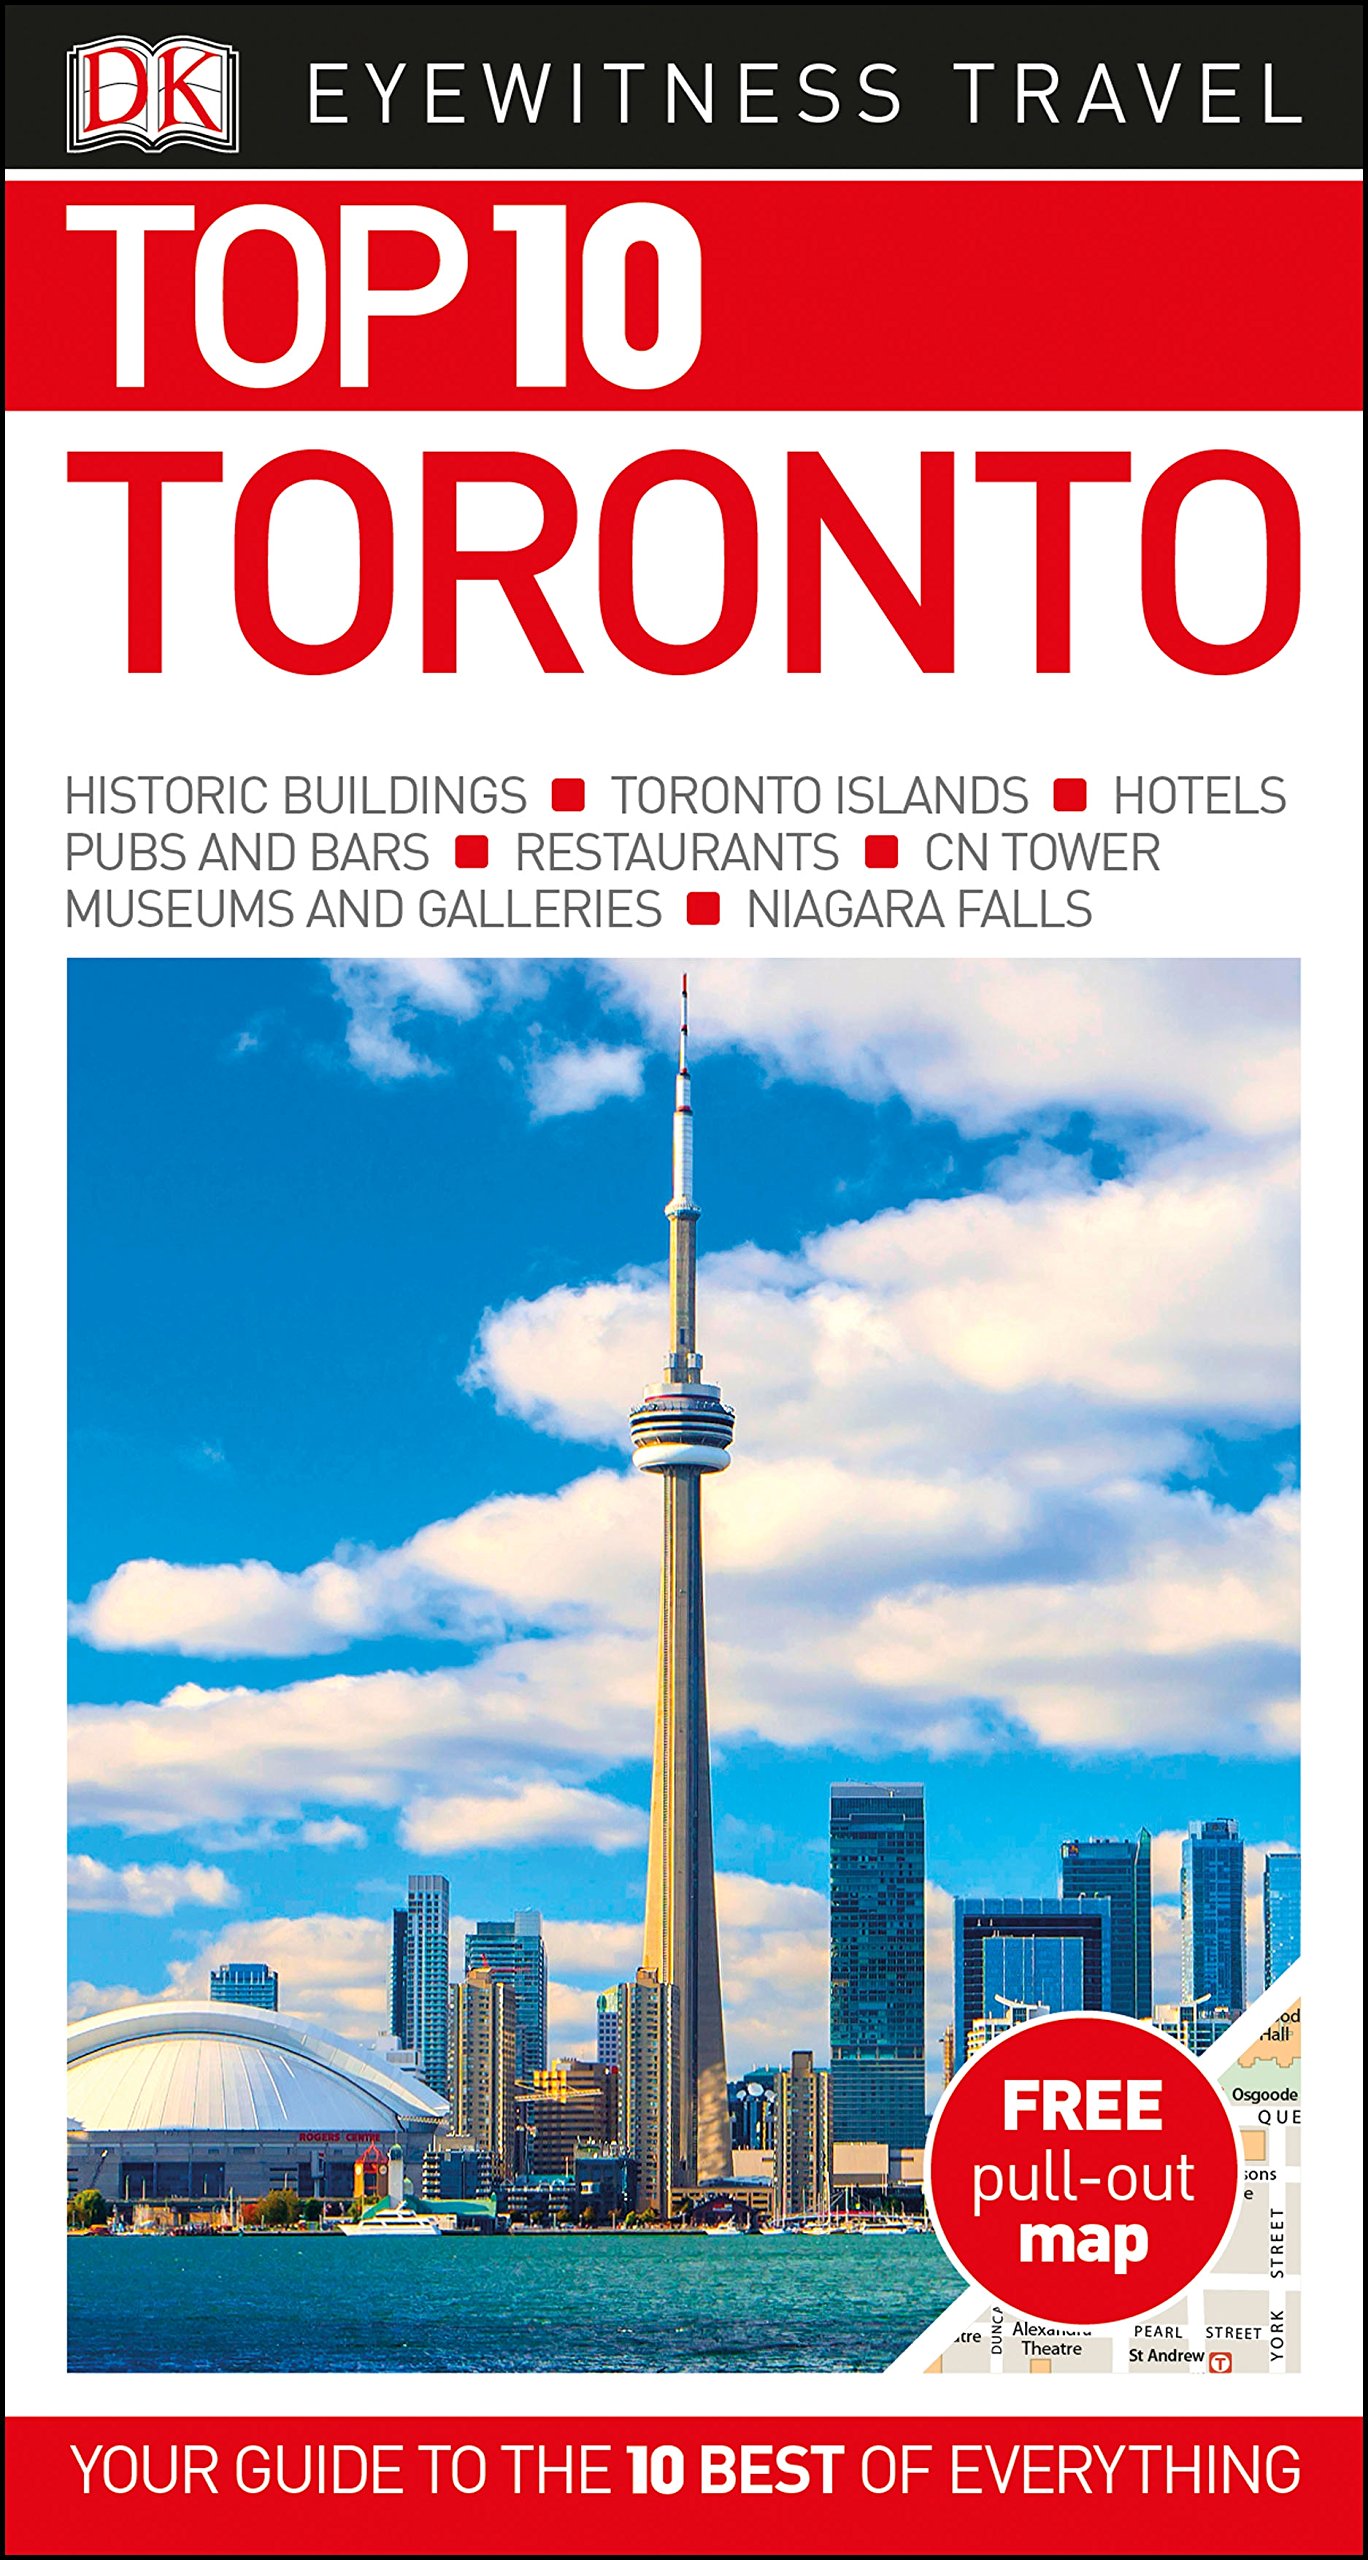 Vezi detalii pentru Top 10 Toronto | DK Travel